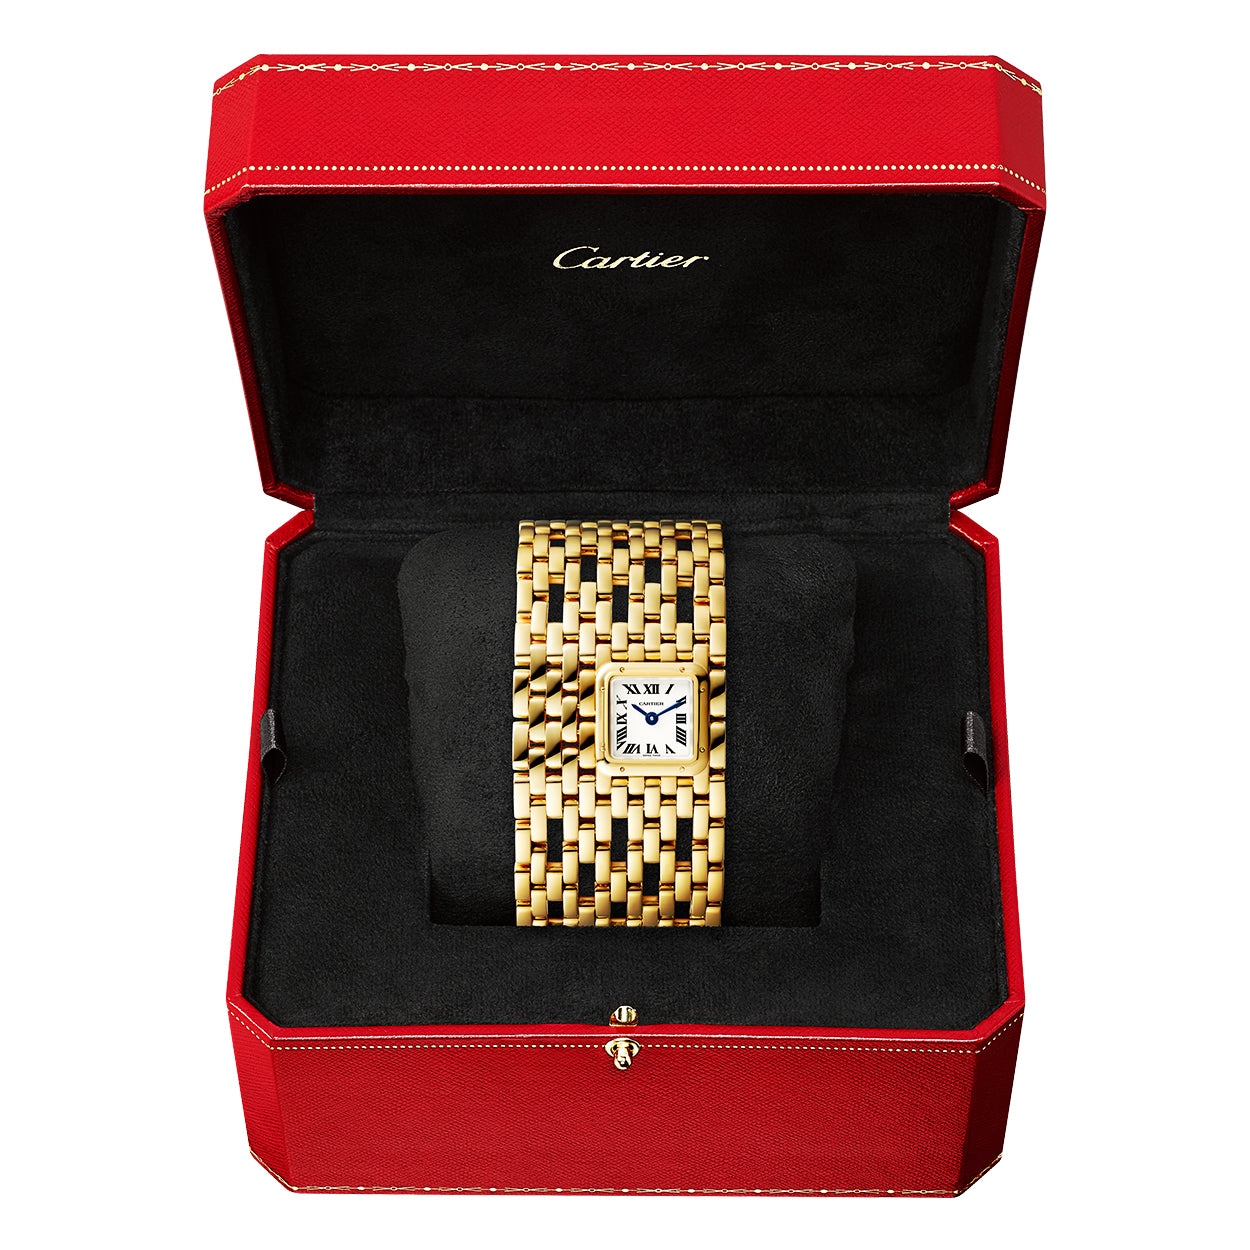 Panthère de Cartier 18ct Yellow Gold Cuff Bangle Watch